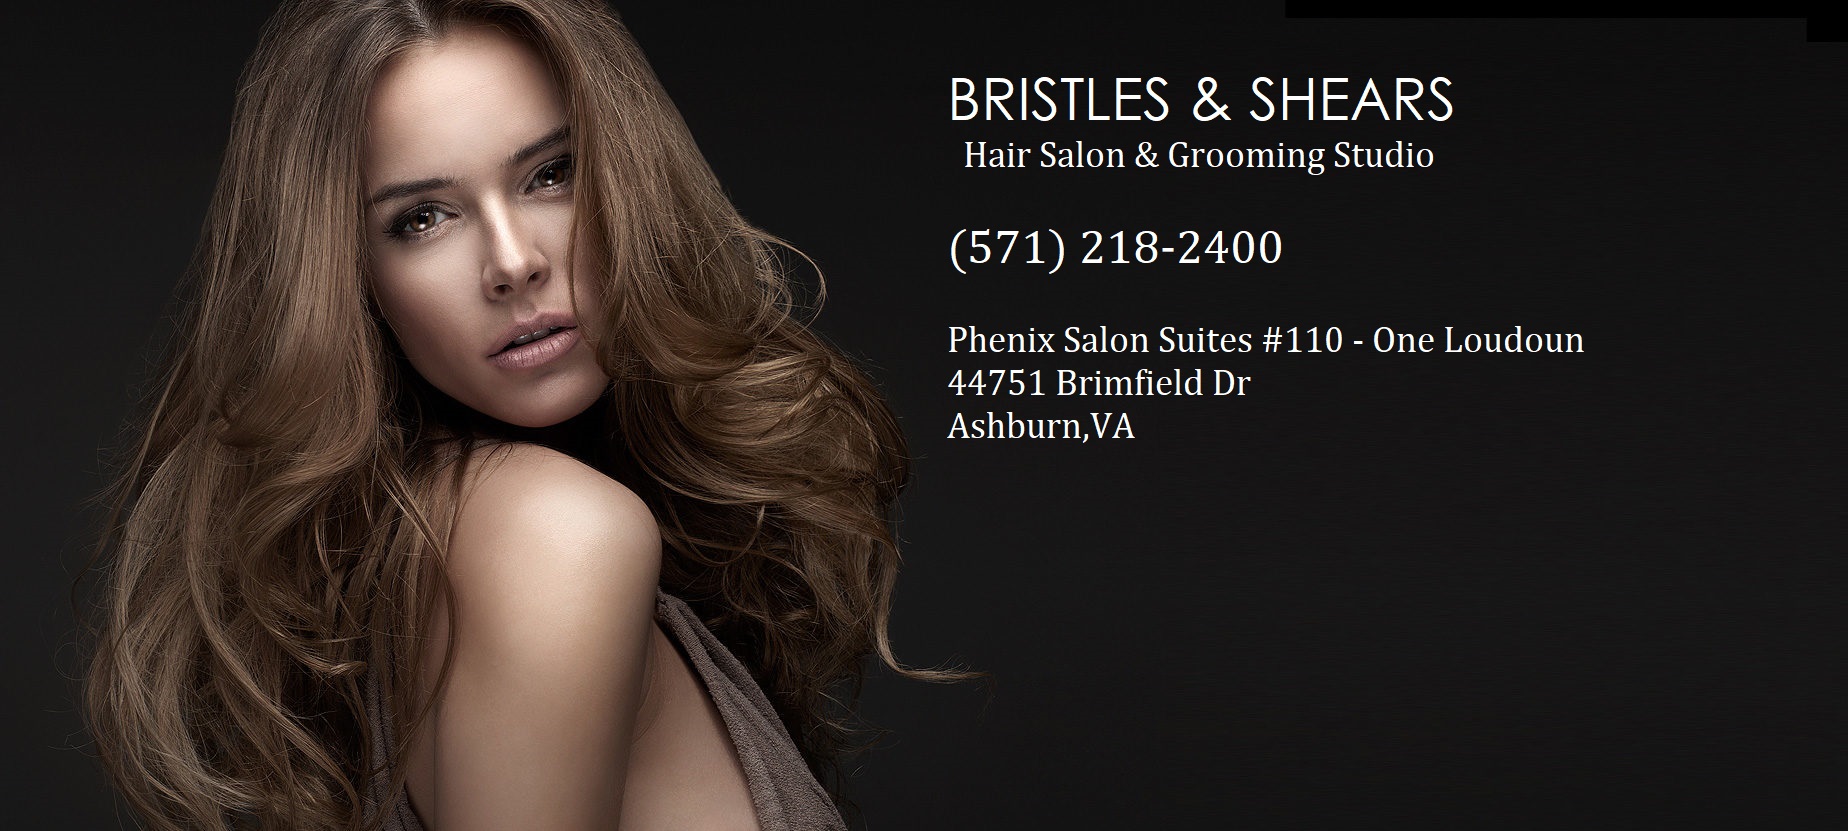 Bristles & Shears Hair Salon and Grooming Studio